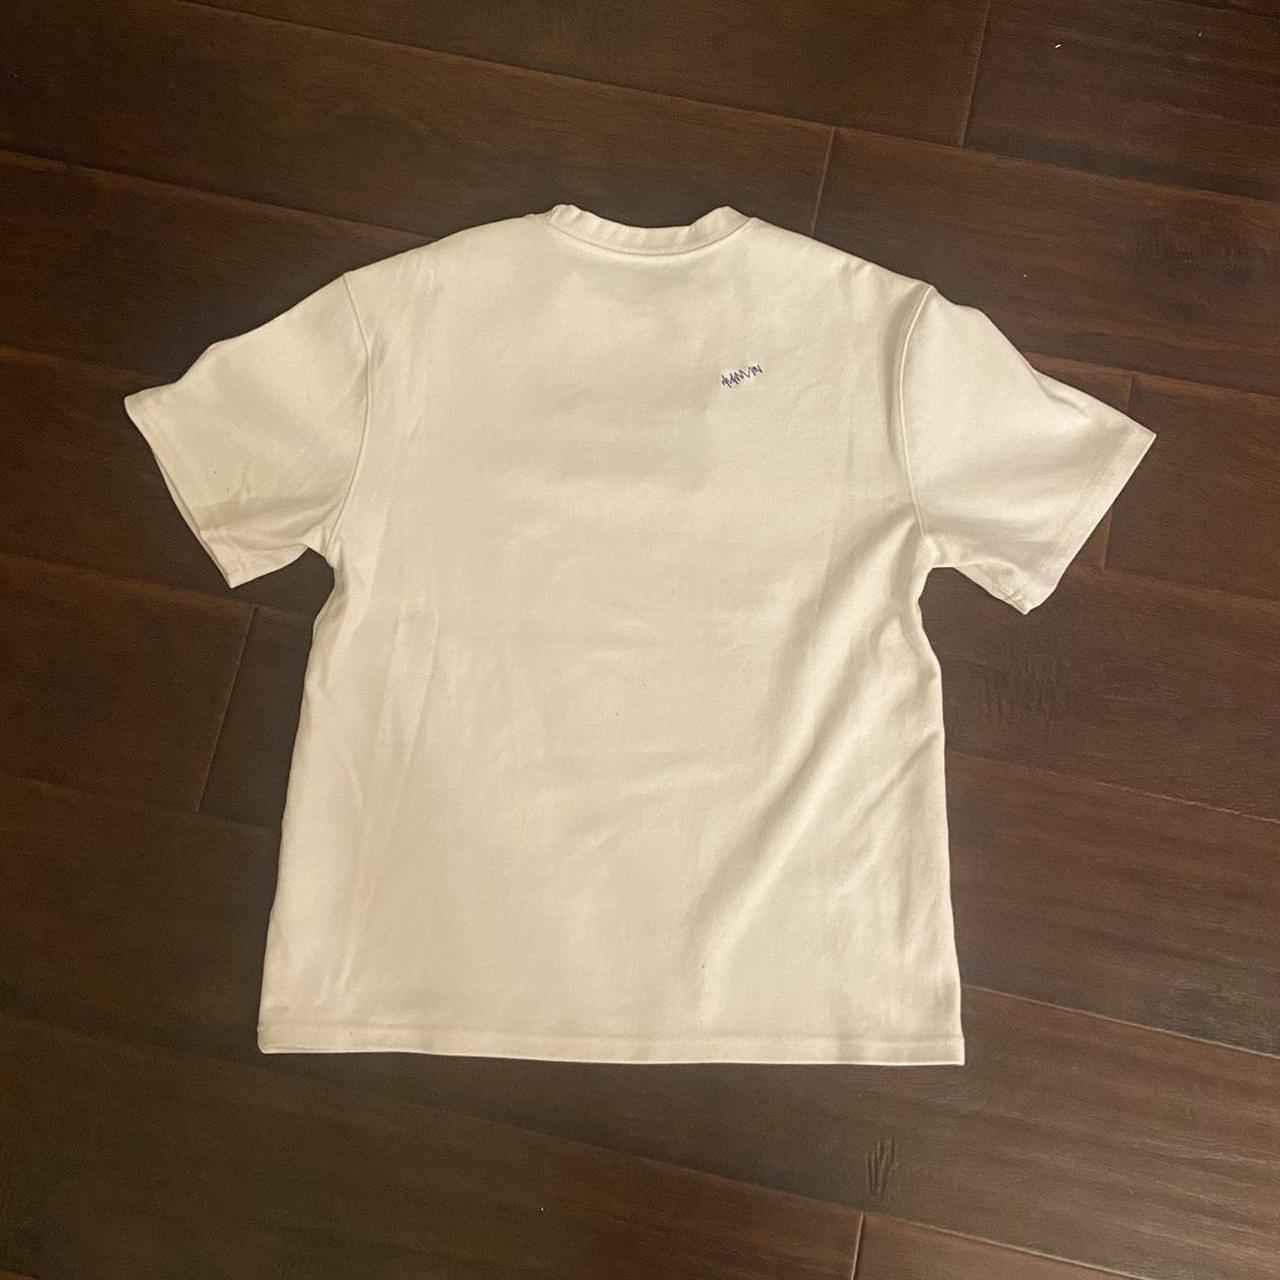 Ader Error Men's White and Cream T-shirt (2)